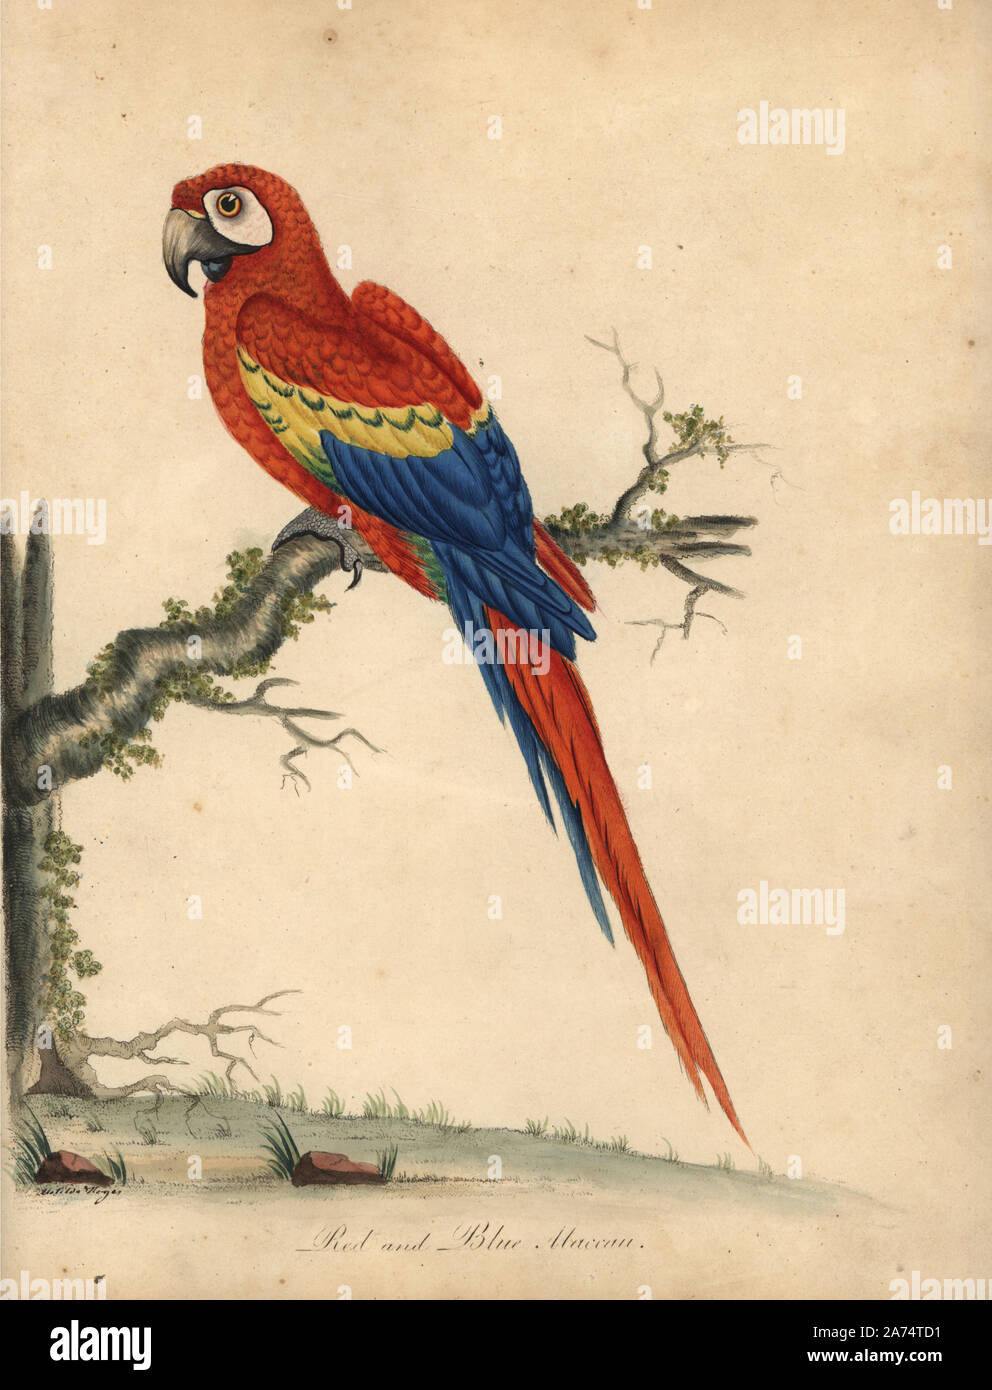 Scarlet Macaw, Ara macao. (Rosso e blu, maccaw Psittacus macao) Handcolored incisione su rame di una William Hayes e sua Matilde da William Hayes' ritratti di rari e curiosi